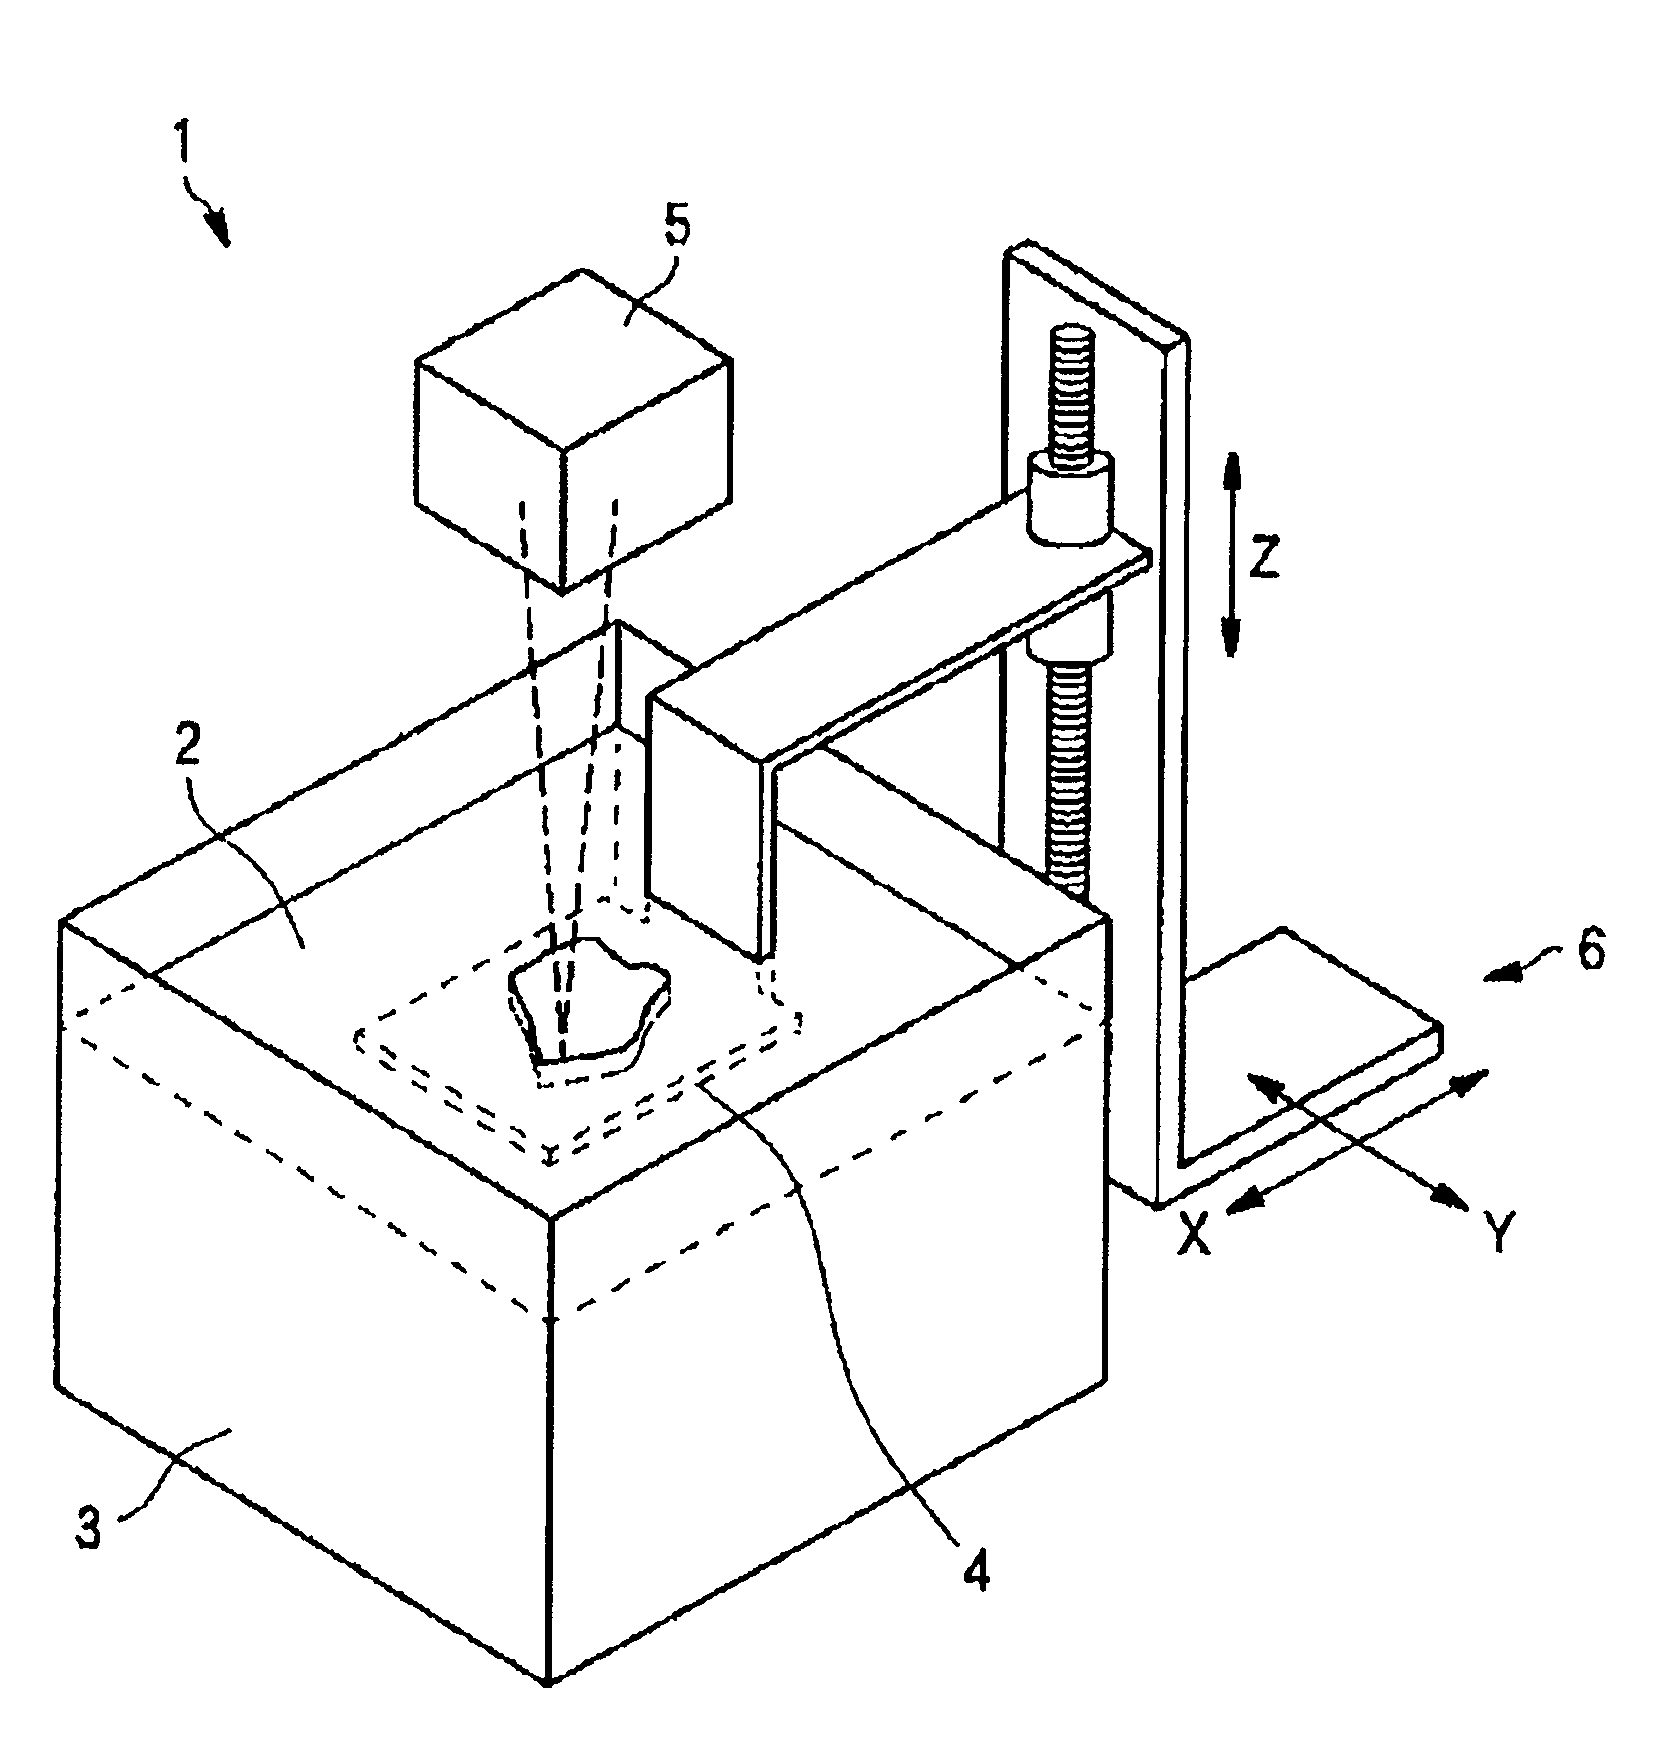 Optical modeling apparatus